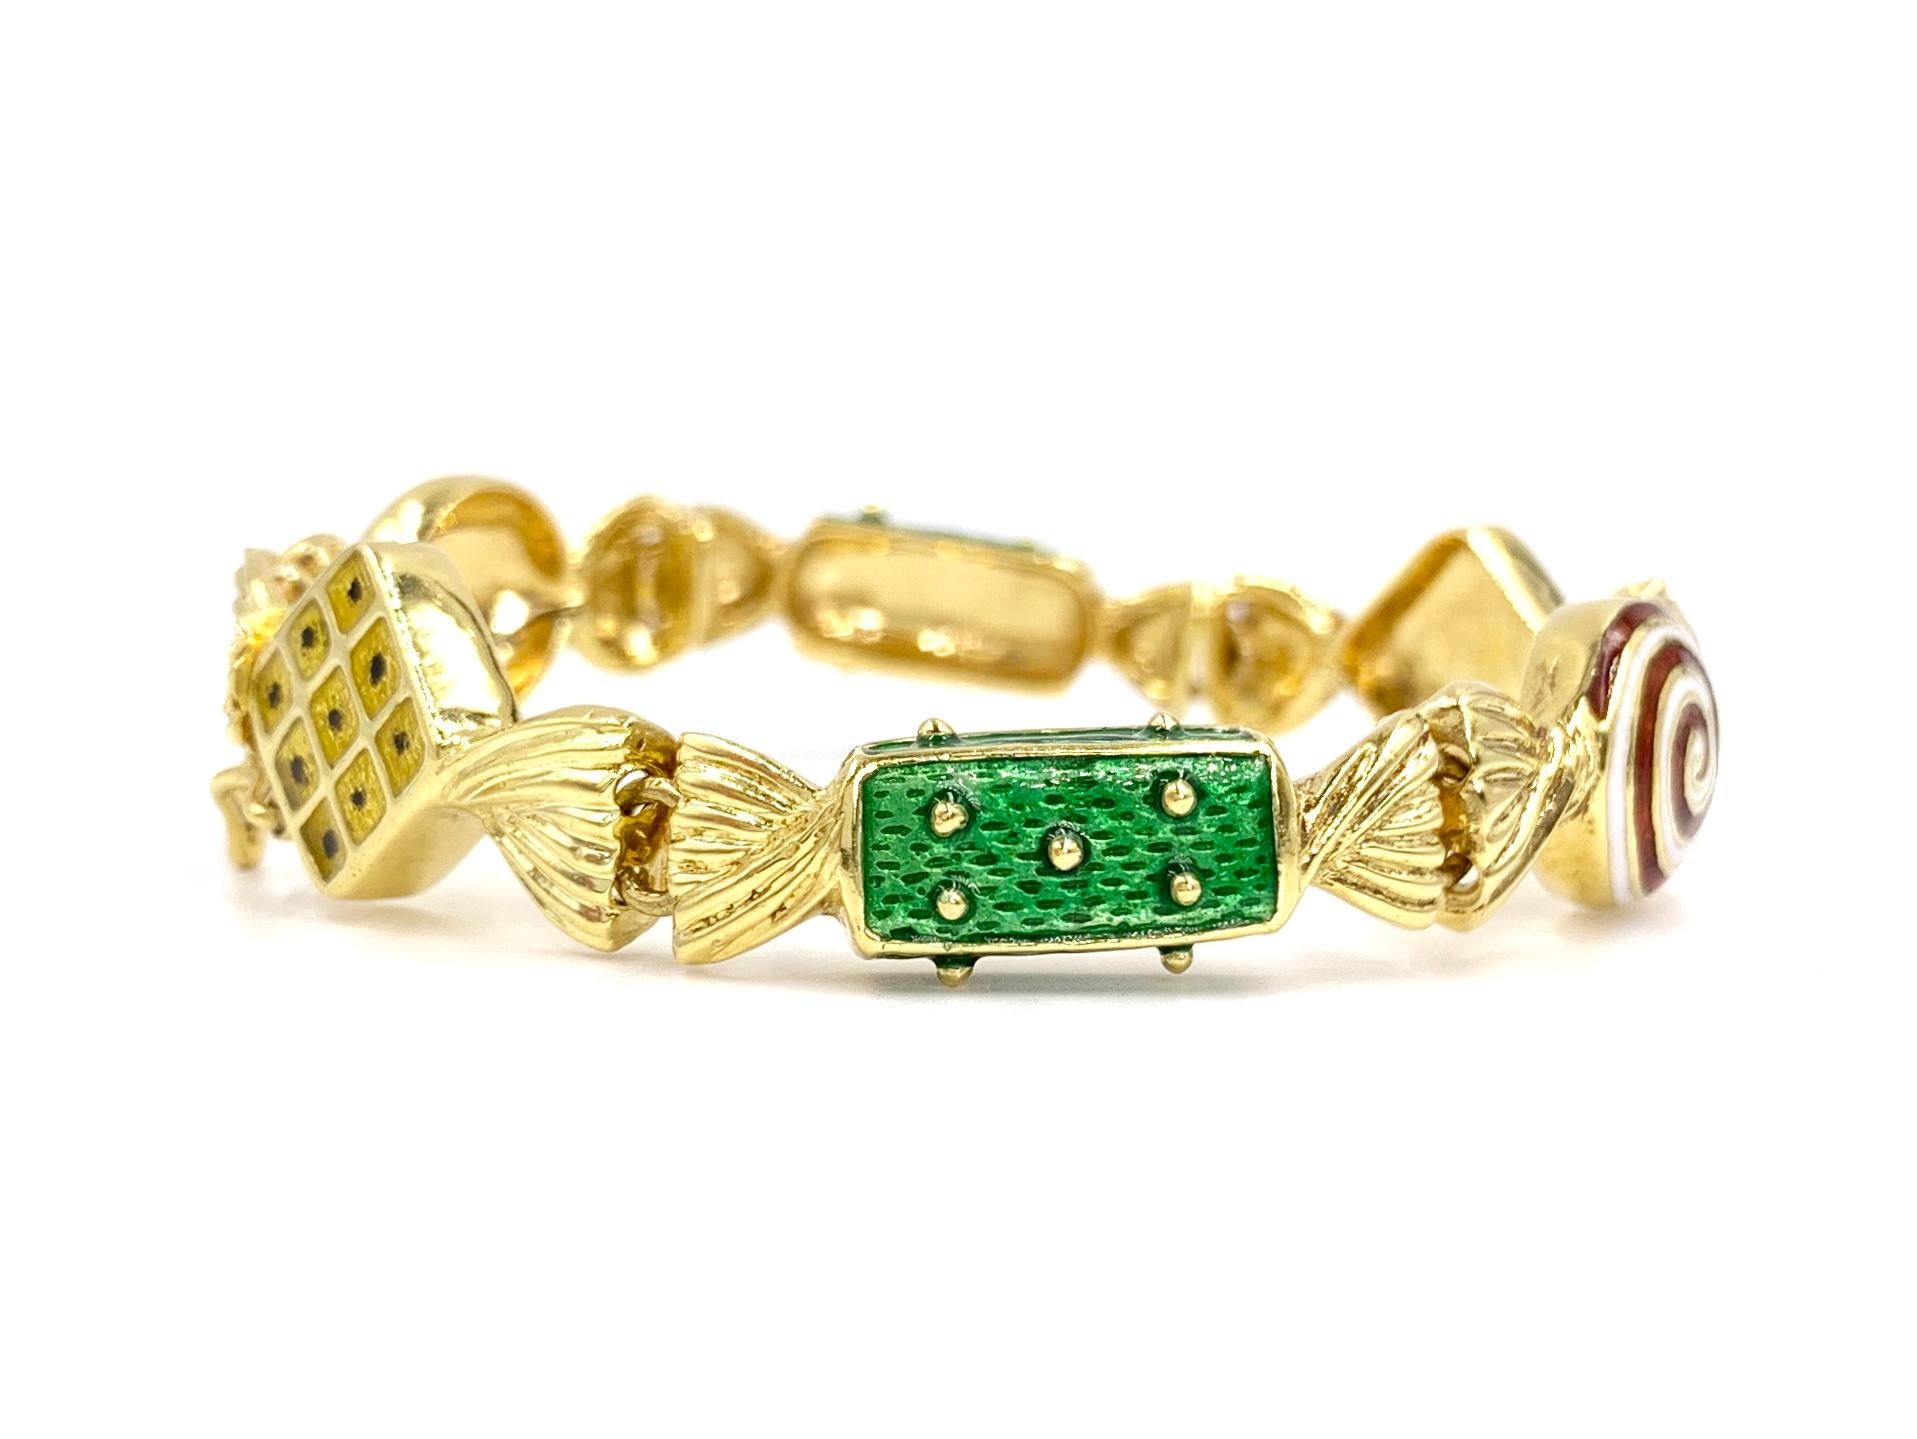 Hidalgo 18 Karat Gold and Enamel Candy Themed Bracelet 3